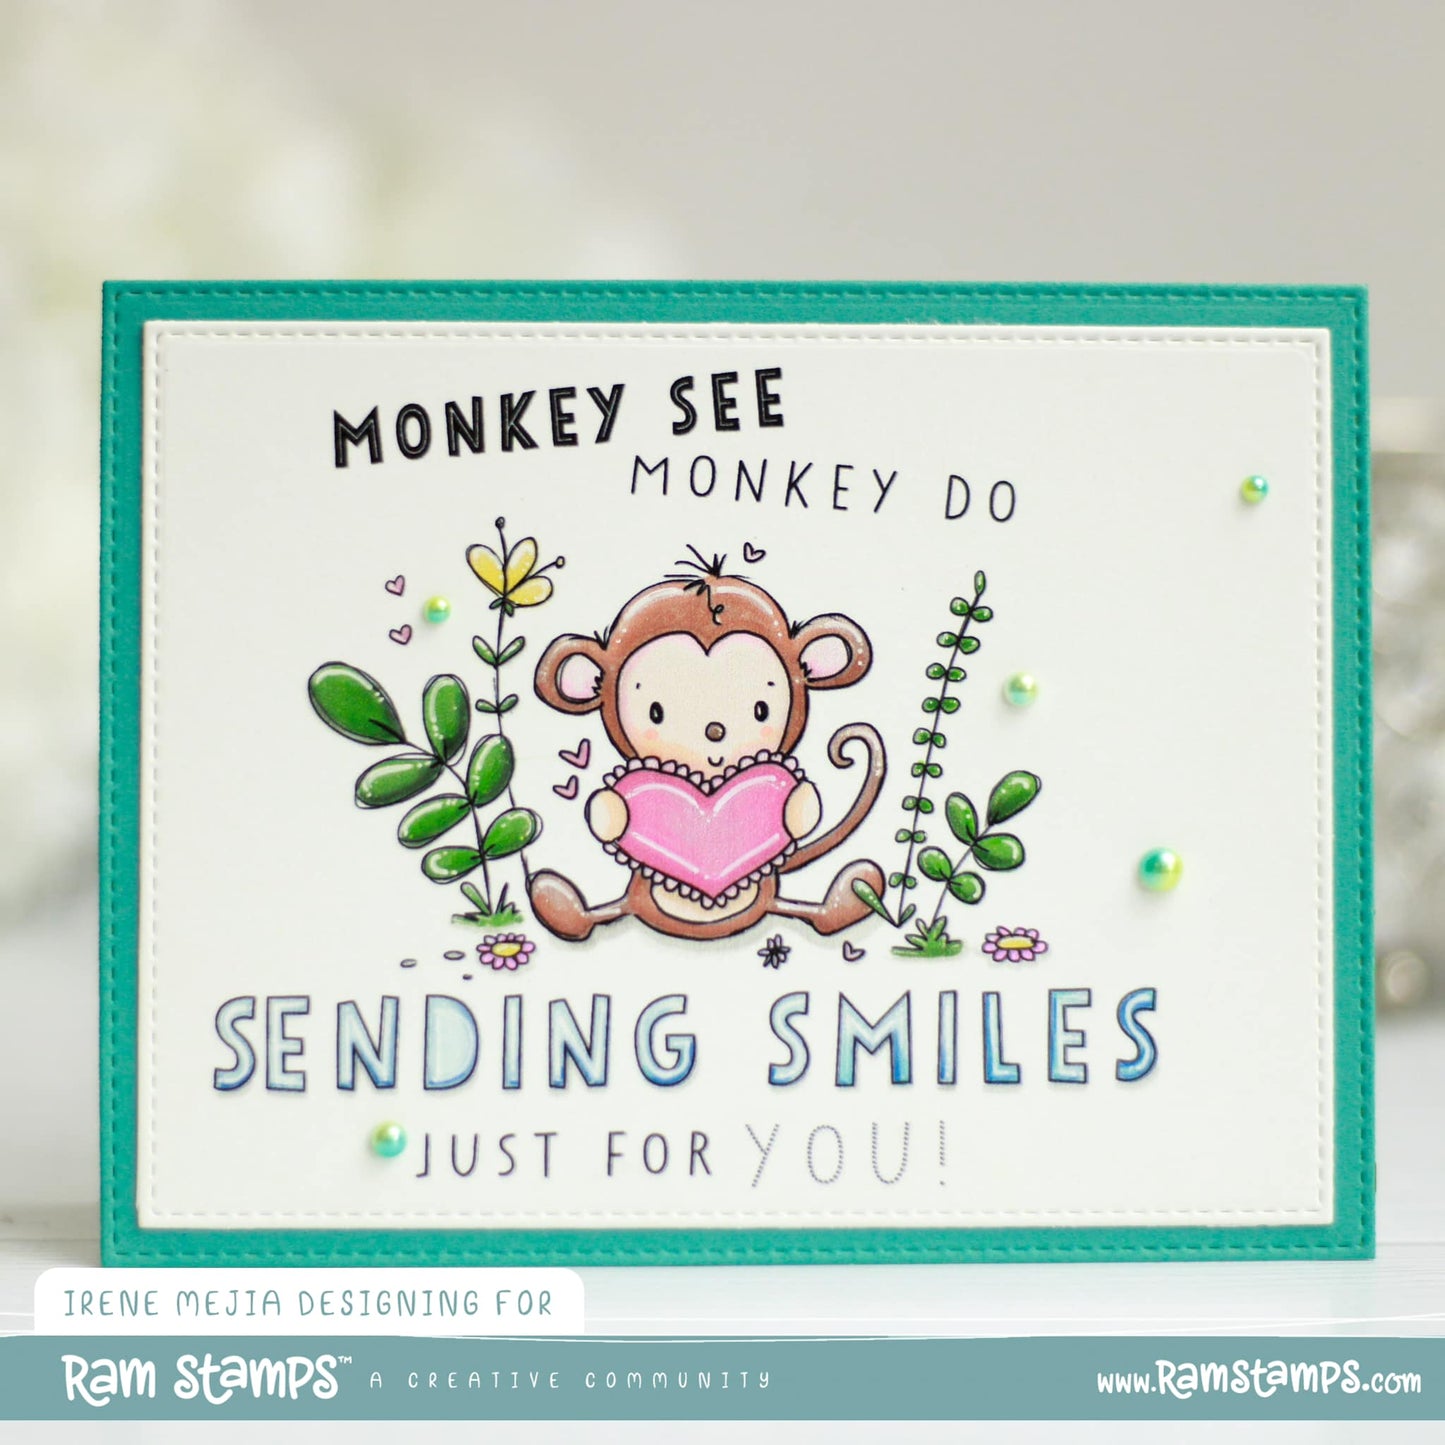 'Monkey Smiles' Mini Scene Creator Digital Stamp